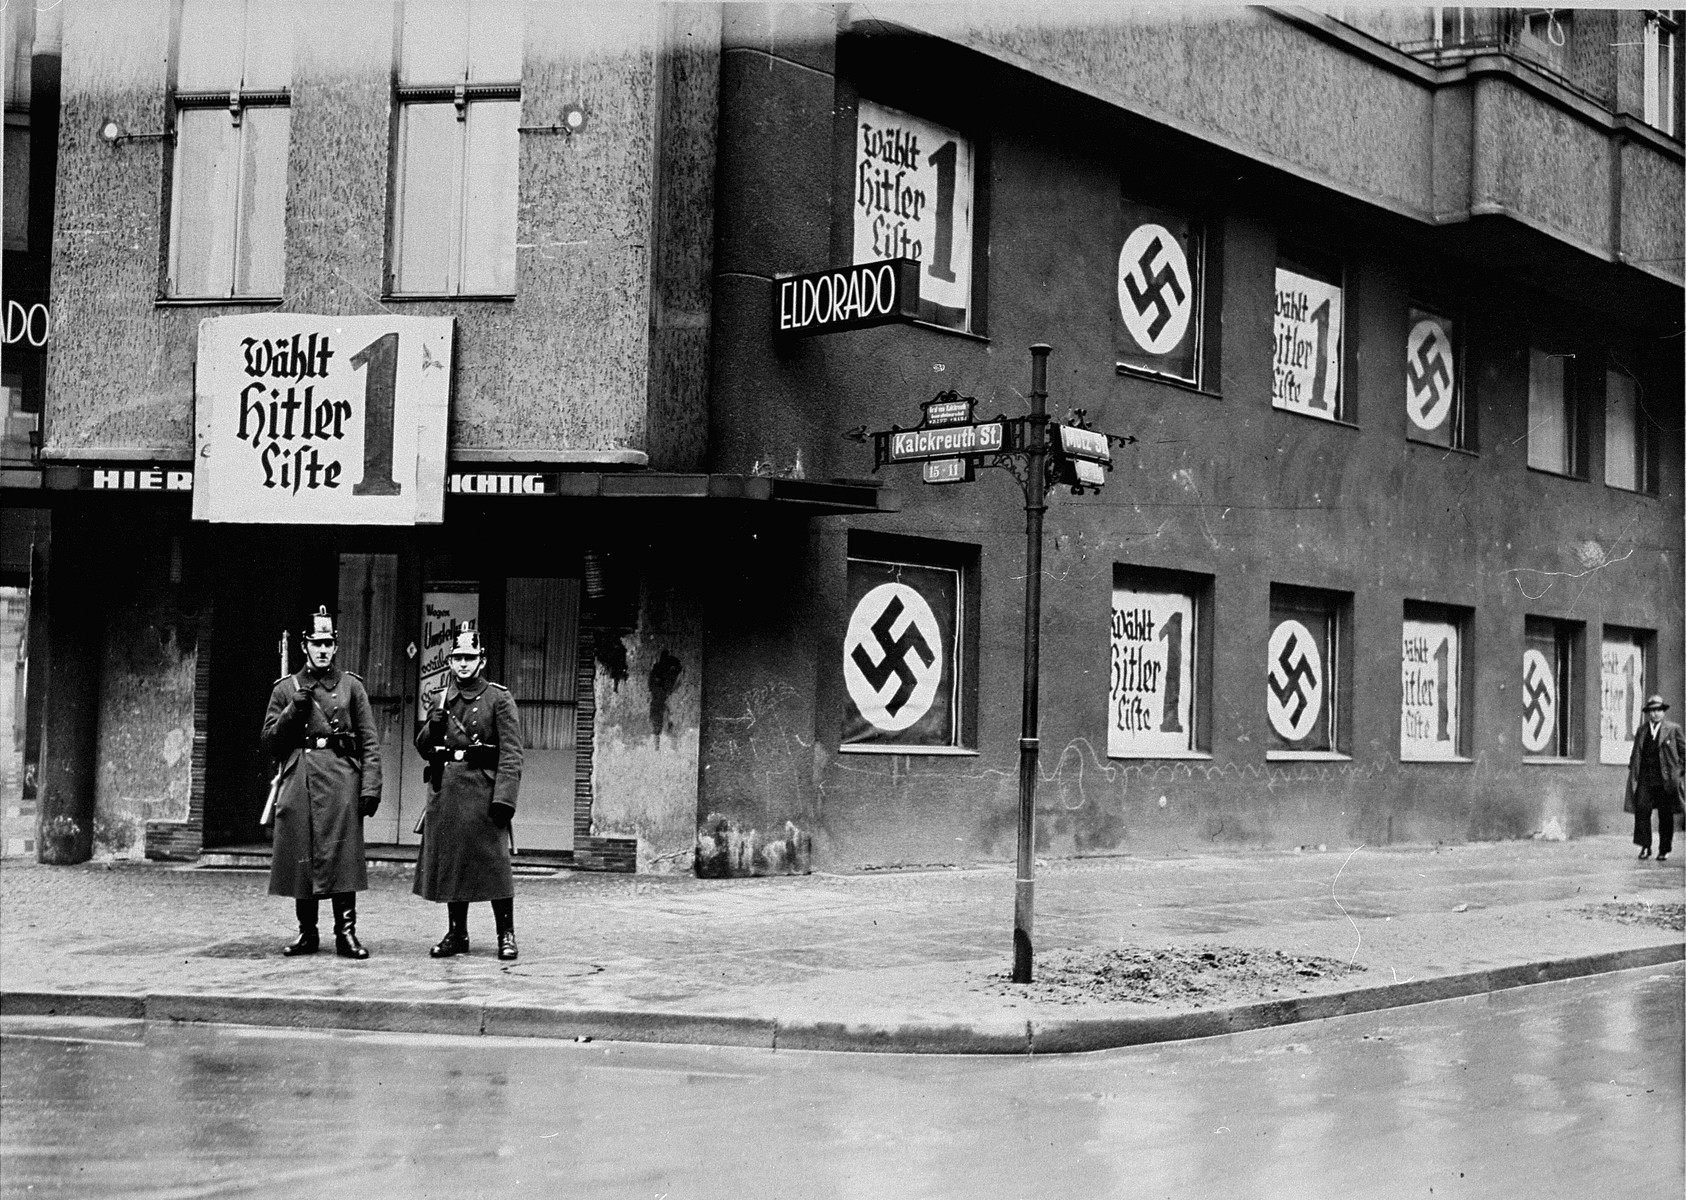 Nazi banners hang in the windows of the former Eldorado nightclub. Image: Landesarchiv Berlin/U.S. Holocaust Memorial Museum